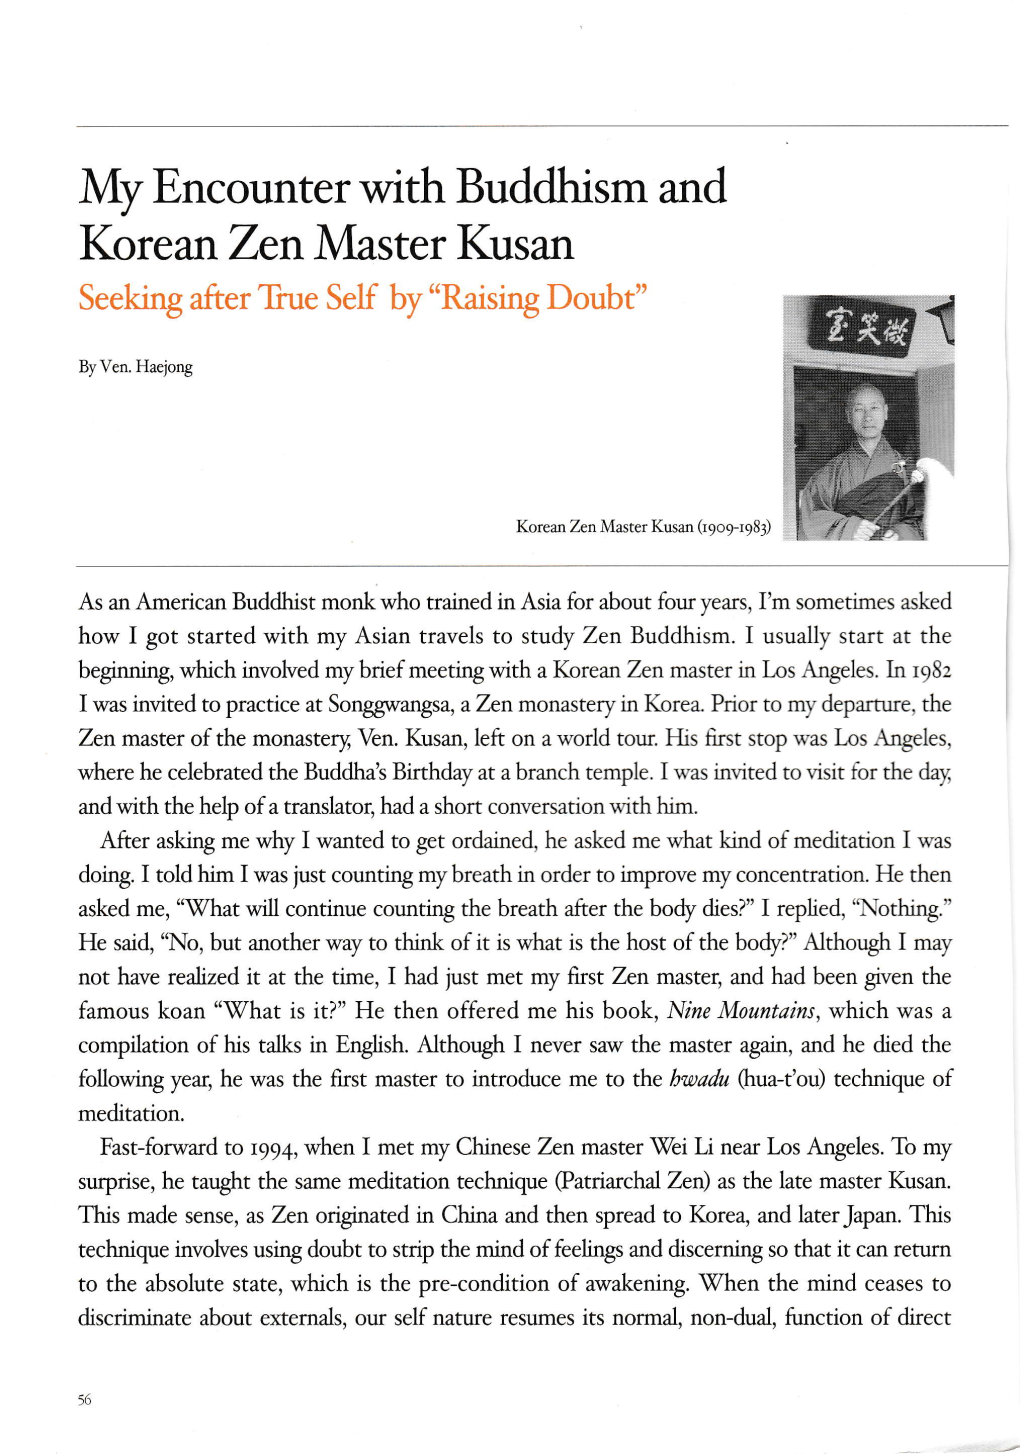 Korean Zenmaster Kusan Seeking After Tiue Self by "Raising Doubt"